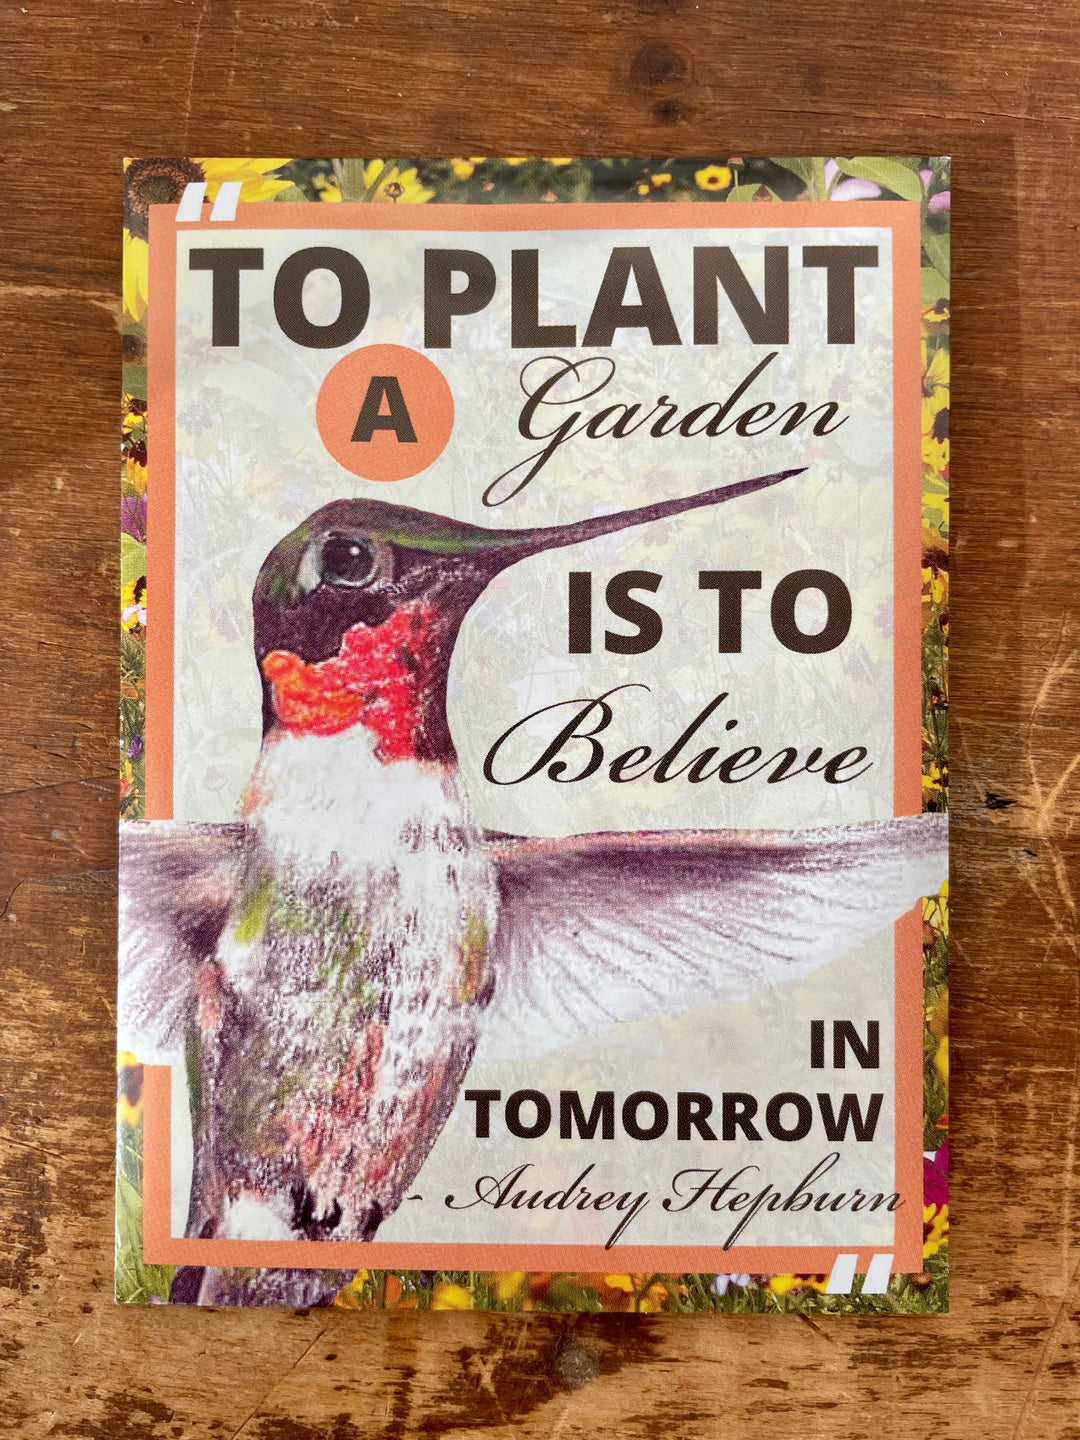 "Believe in Tomorrow" Garden Greetings Kit w. Wildflower Seed Packet, Infosheets + "Let Yourself Grow" Greeting Card (Celebrate Pollinators)